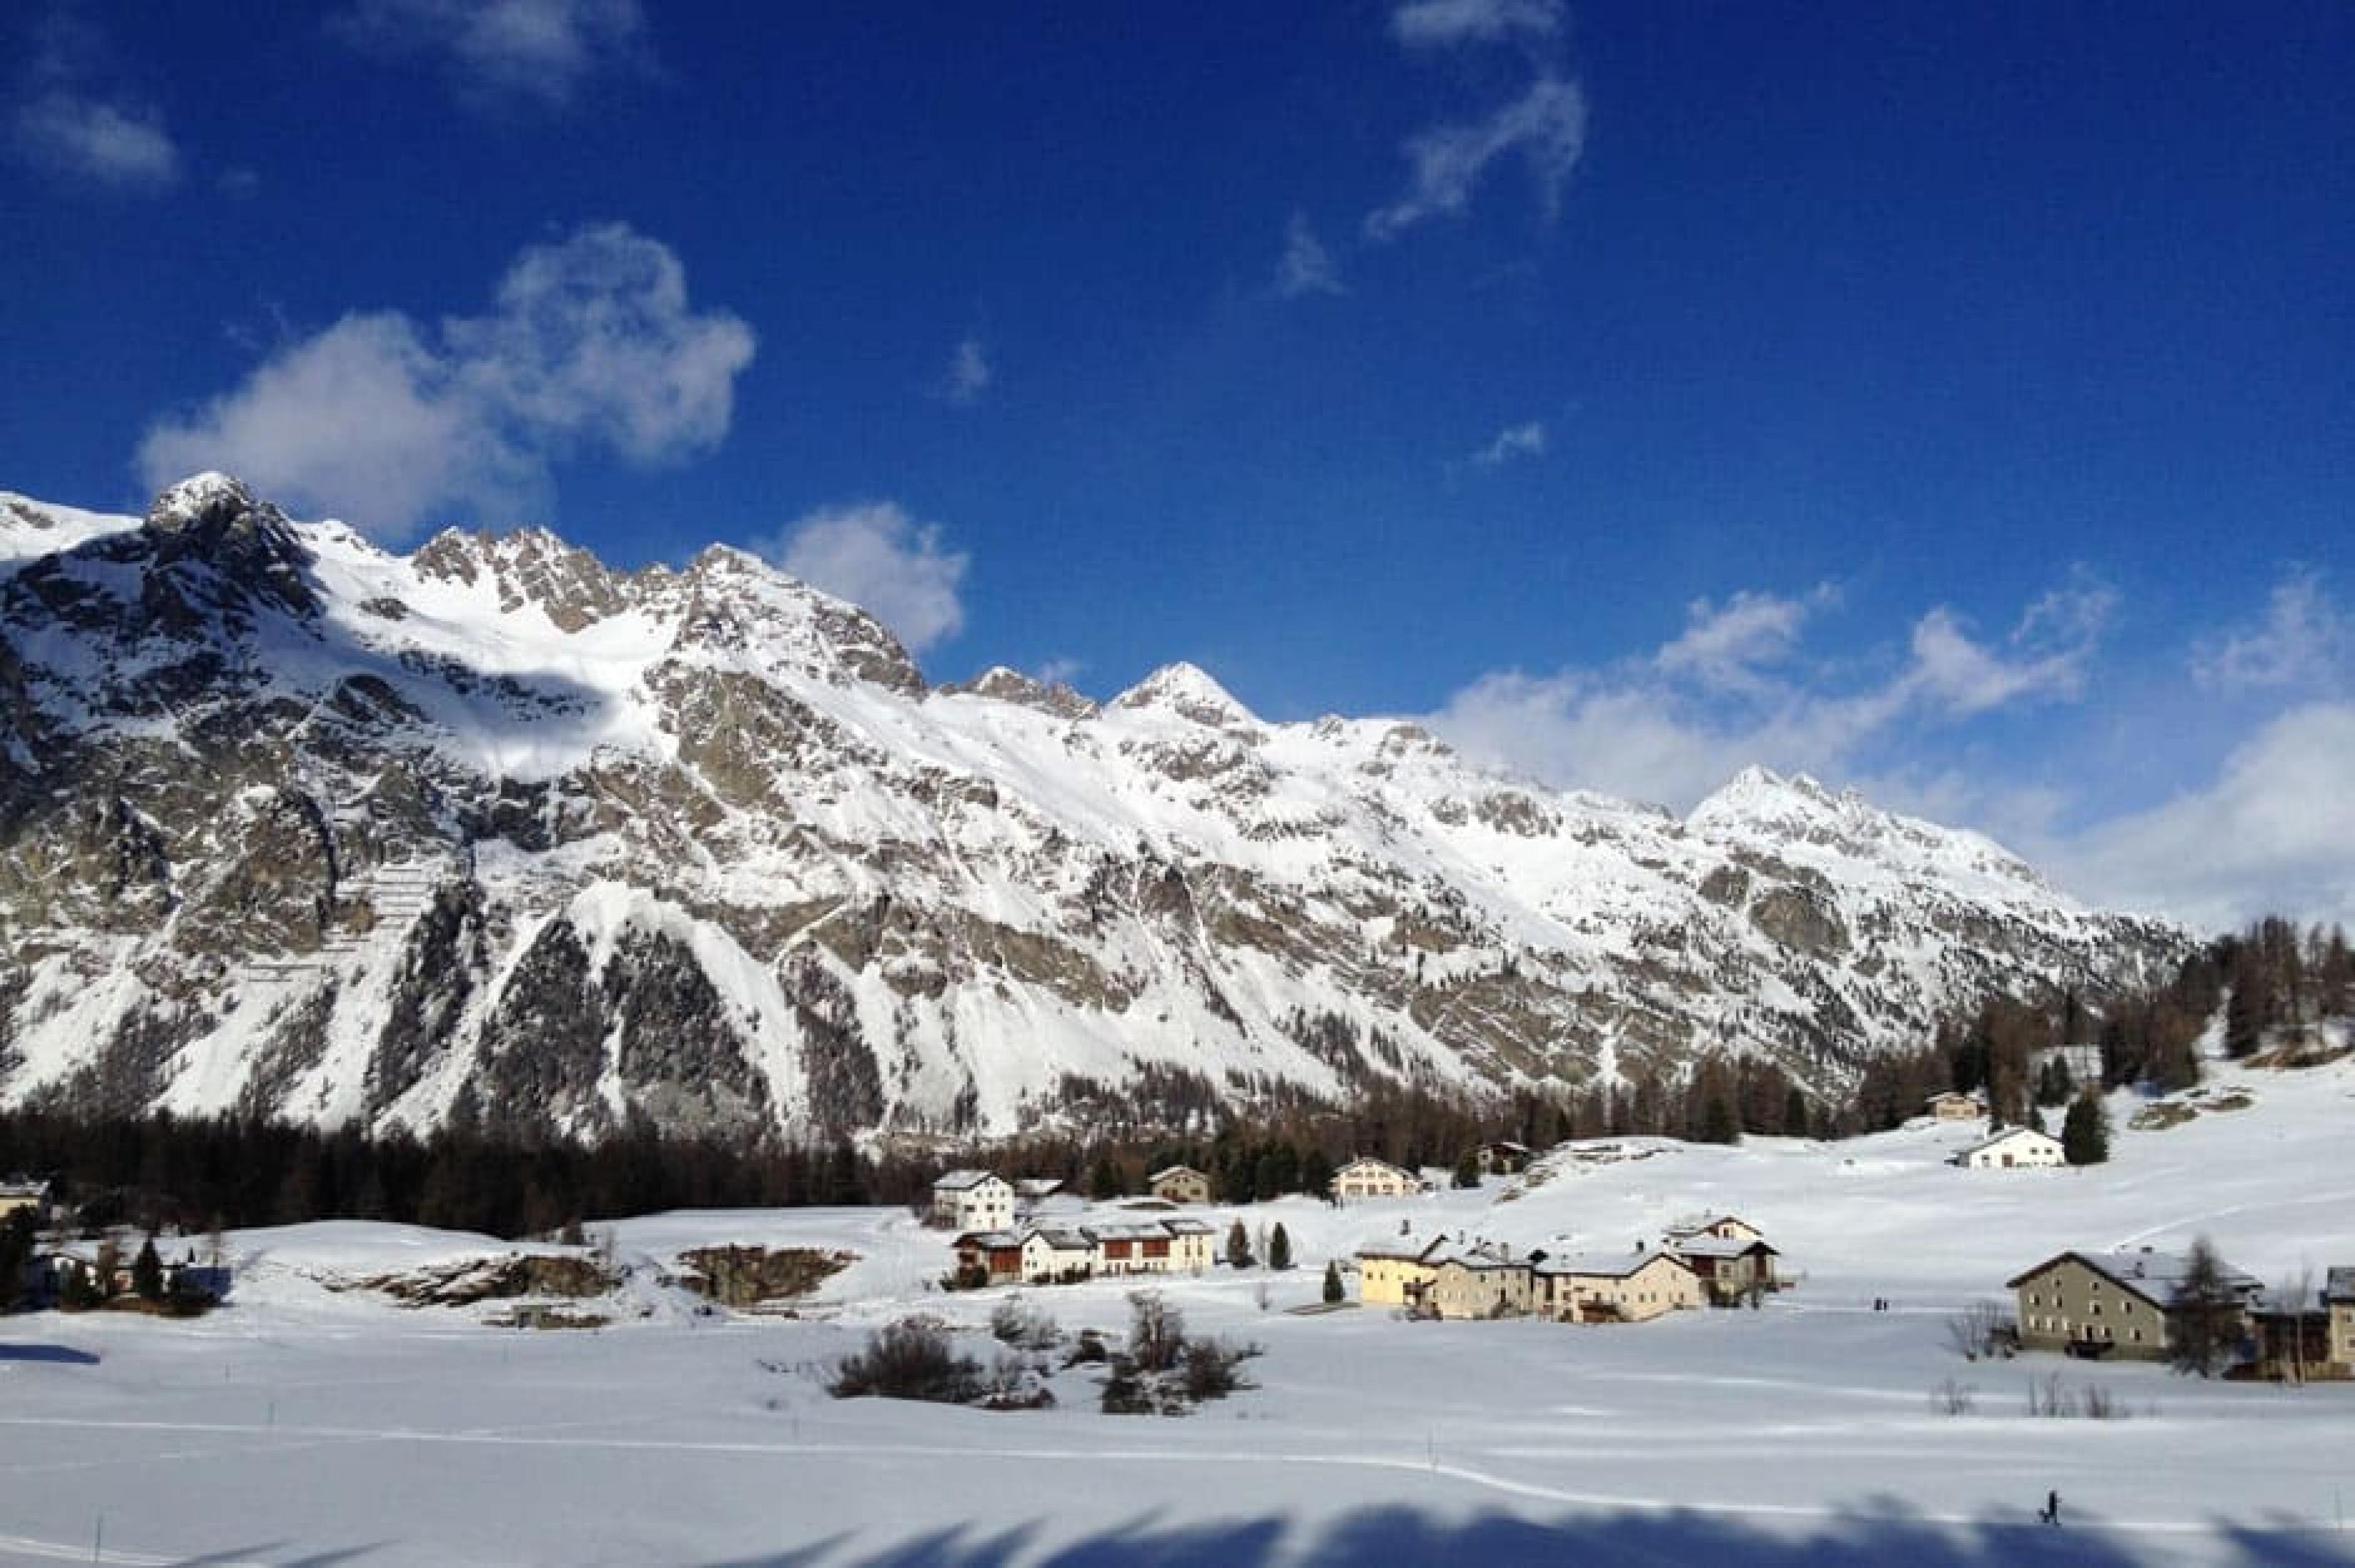 Beautiful Landscape at The Valleys: Fex, Roseg & Bever , St. Moritz, Switzerland